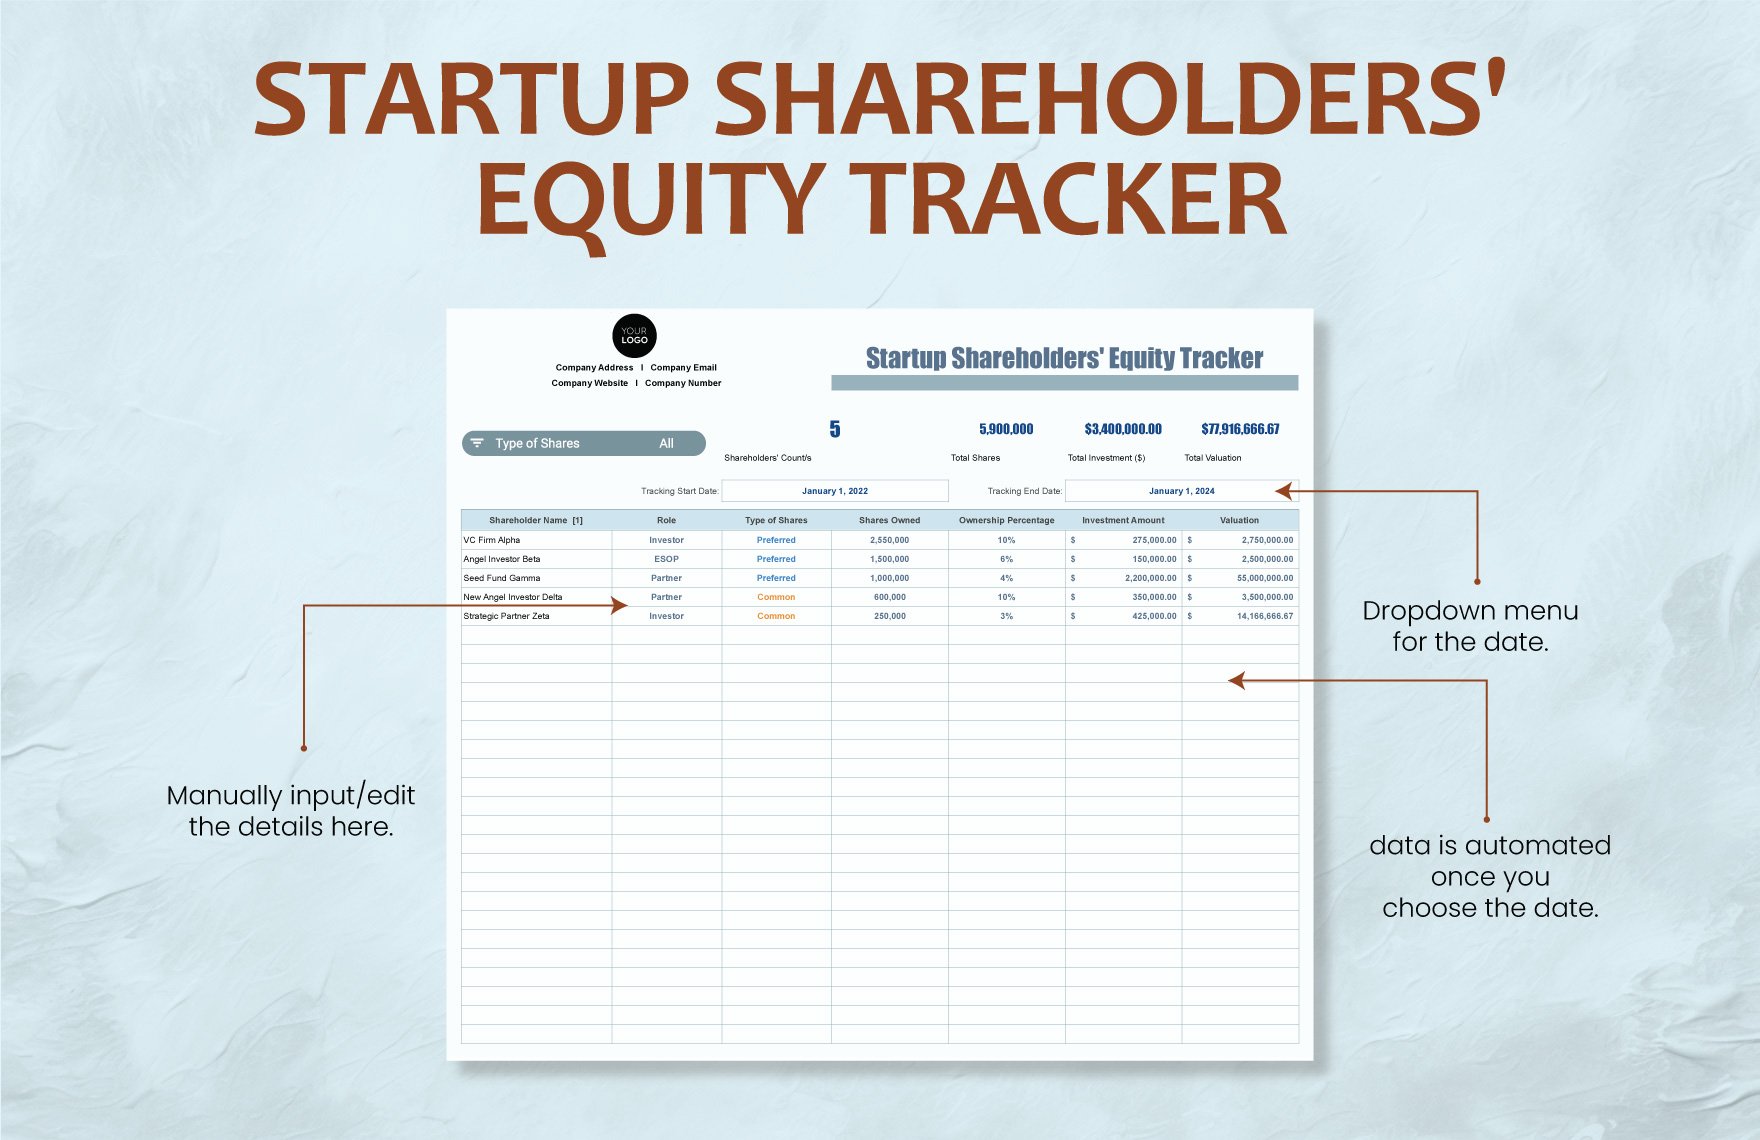 Startup Shareholders' Equity Tracker Template